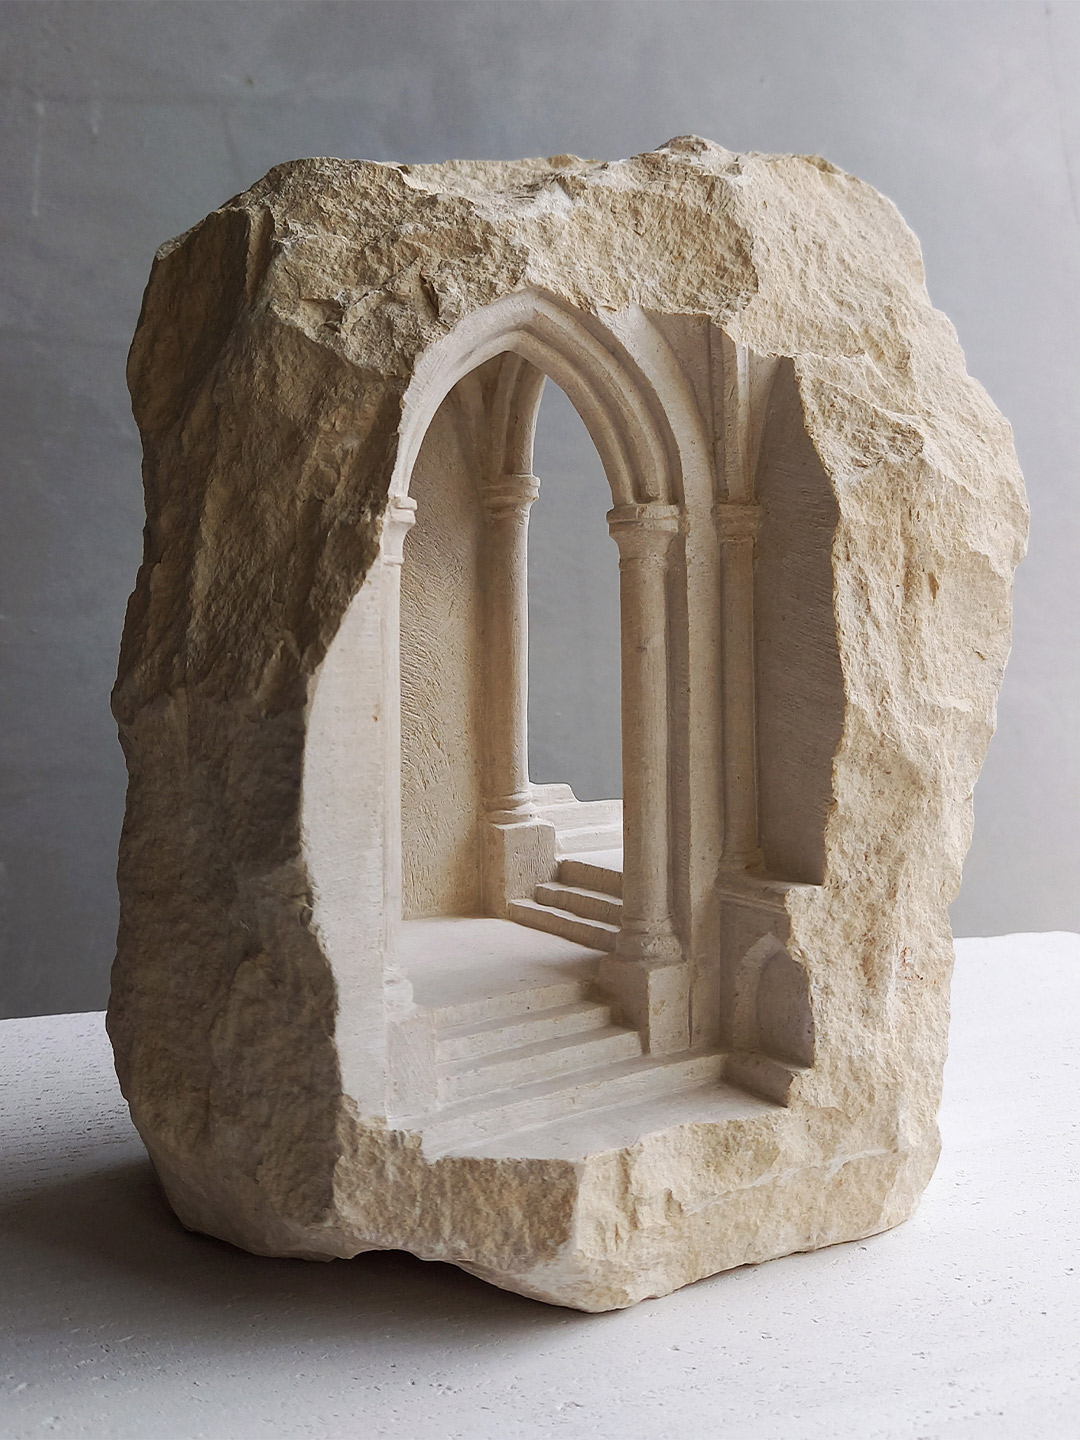 Stone sculpture by artist Matthew Simmonds